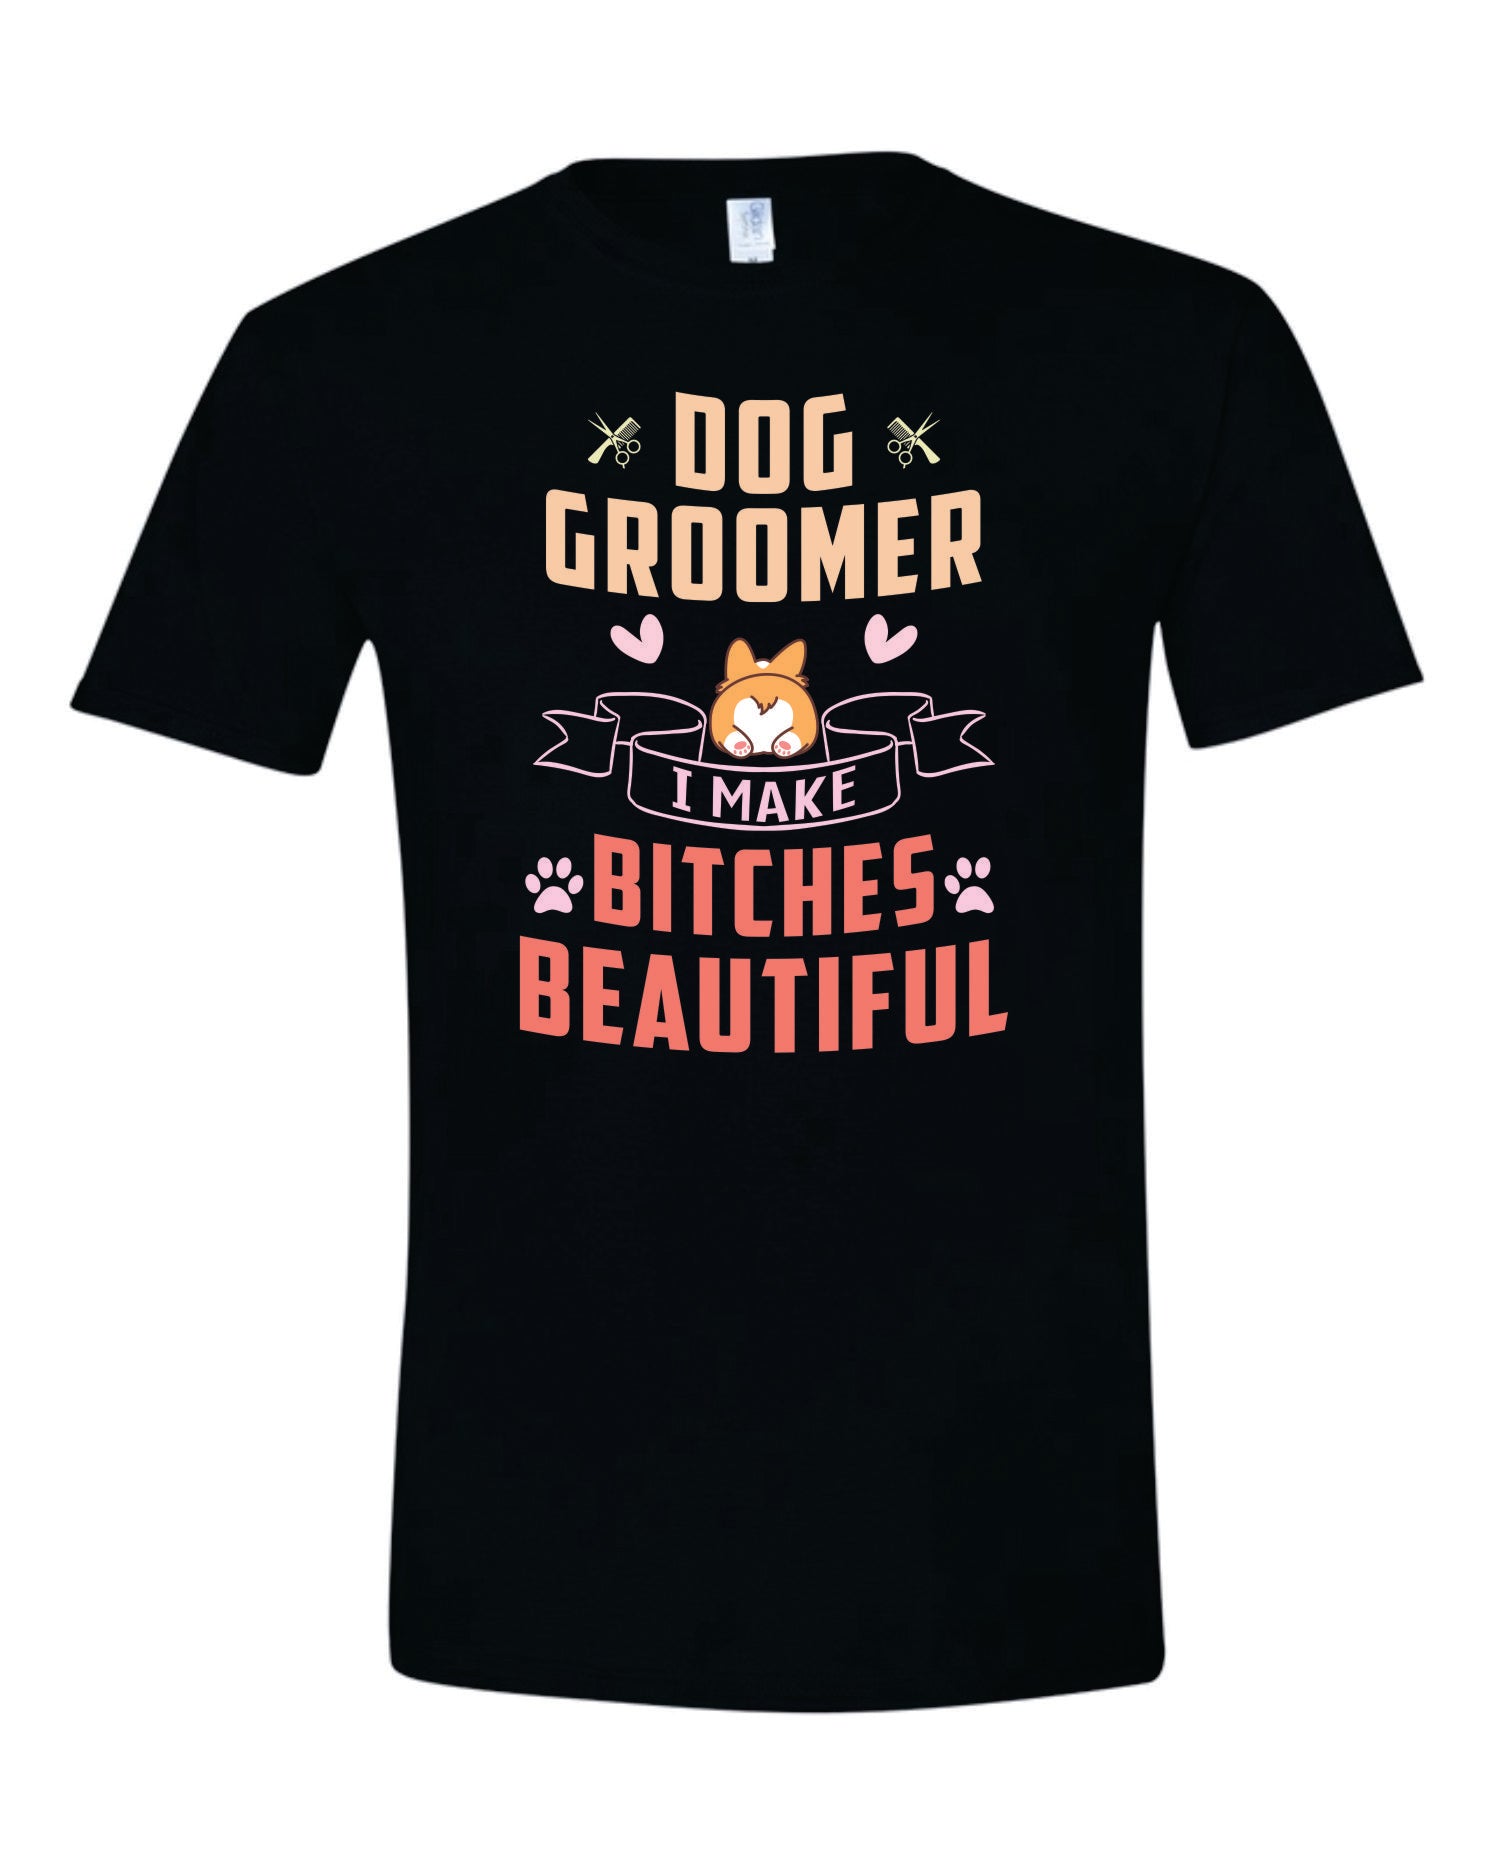 Dog Groomer: I Make Bitches Beautiful - Humor Grooming Shirt